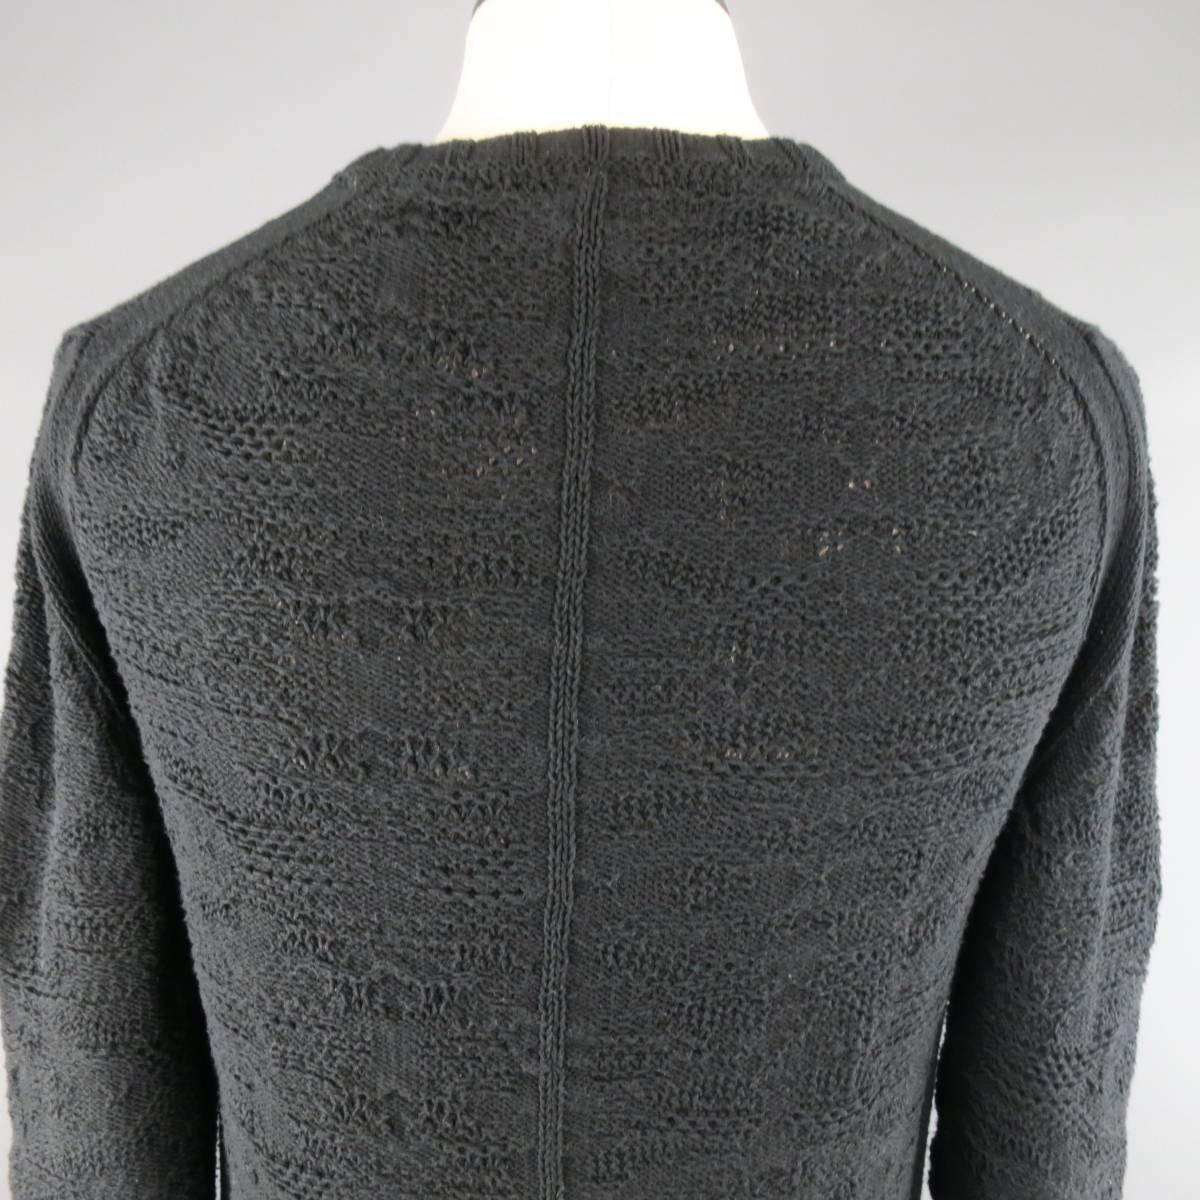 SILENT by DAMIR DOMA Size S Black Textured Cotton Knit Crewneck Slit Pullover 3